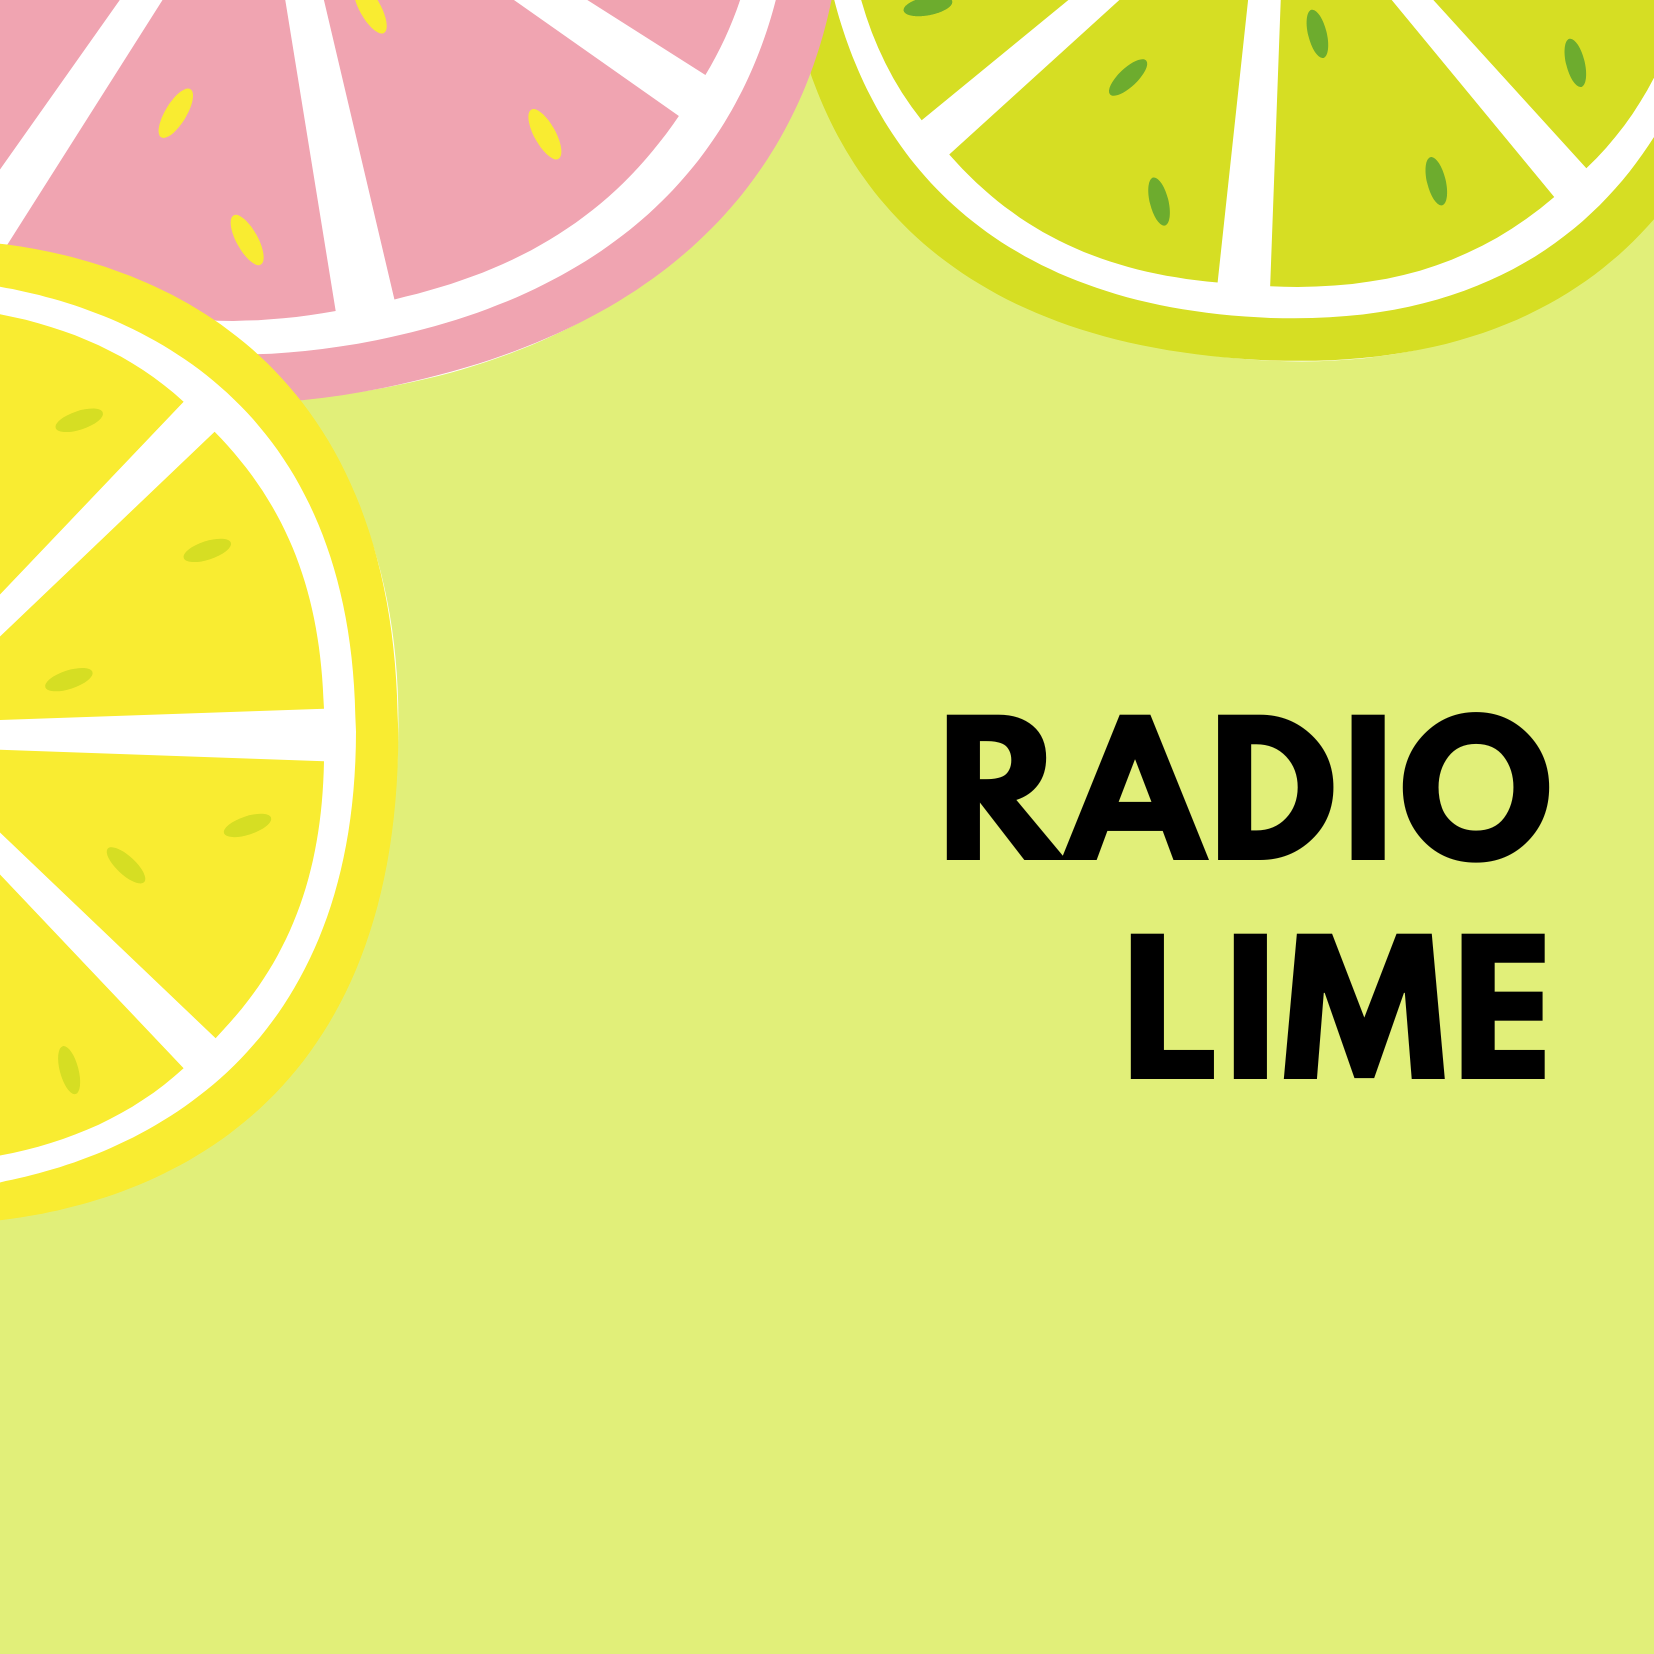 RADIO Lime